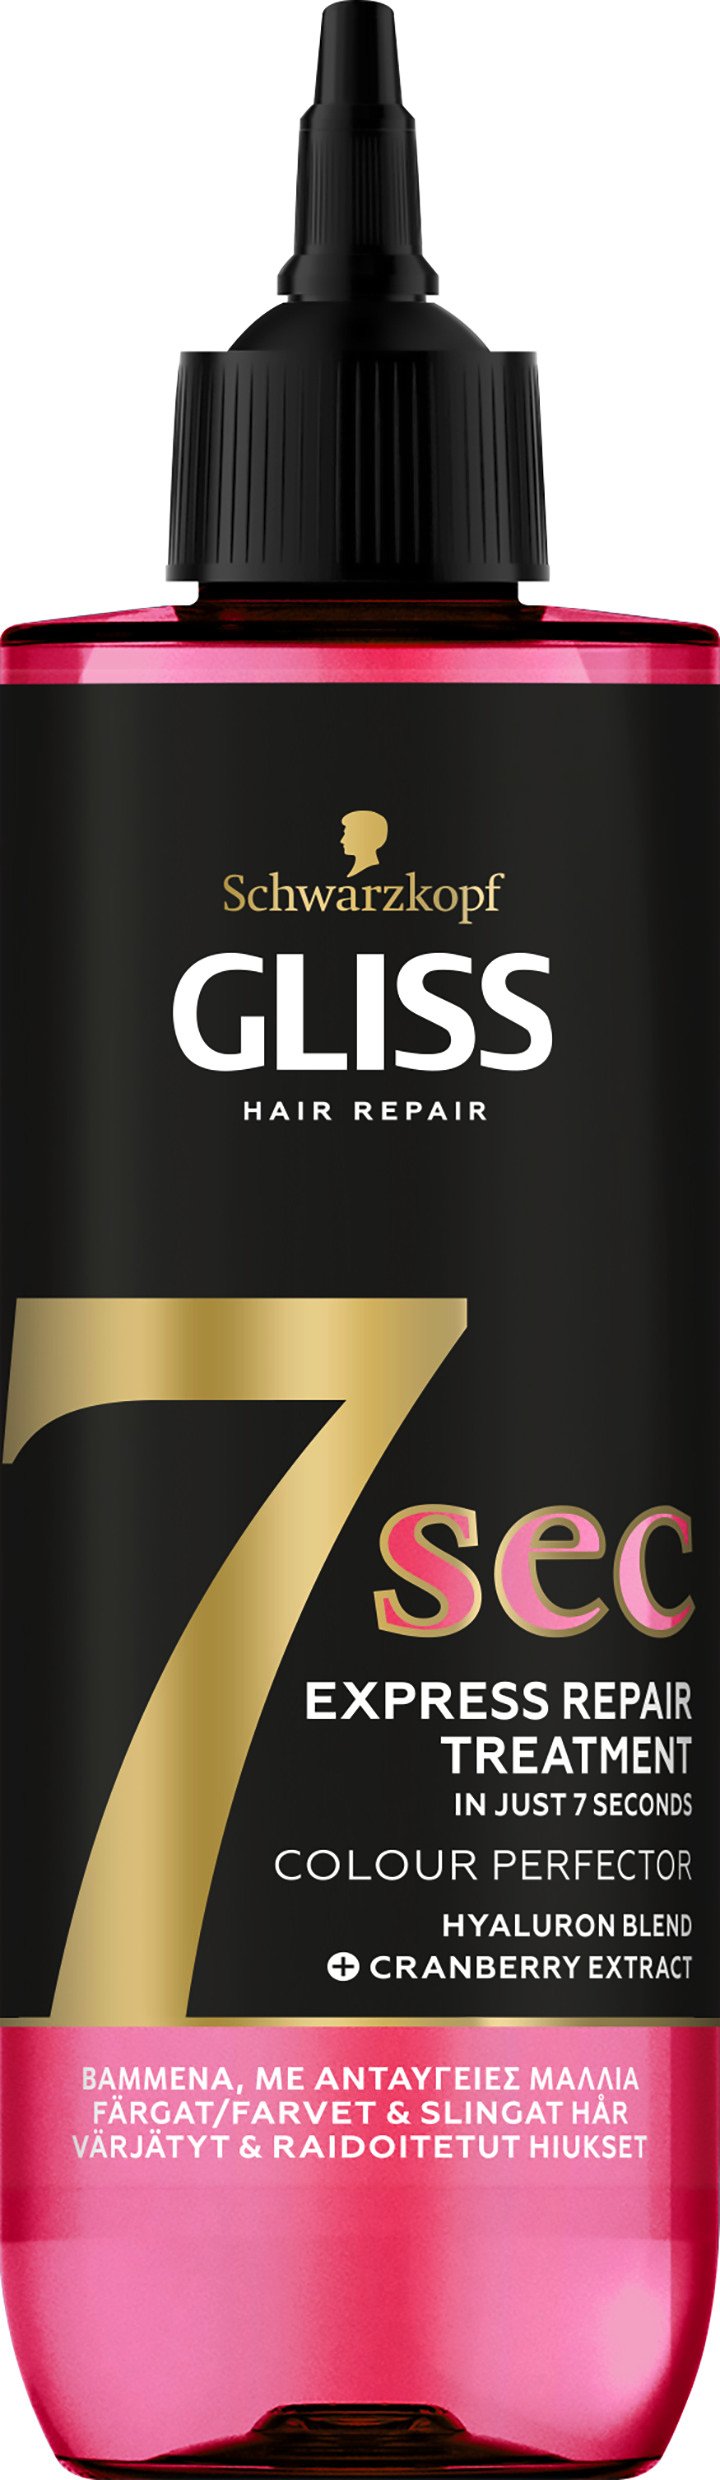 Schwarzkopf Gliss 7 Sec Express Repair Treatment Colour Perfector 200 ml